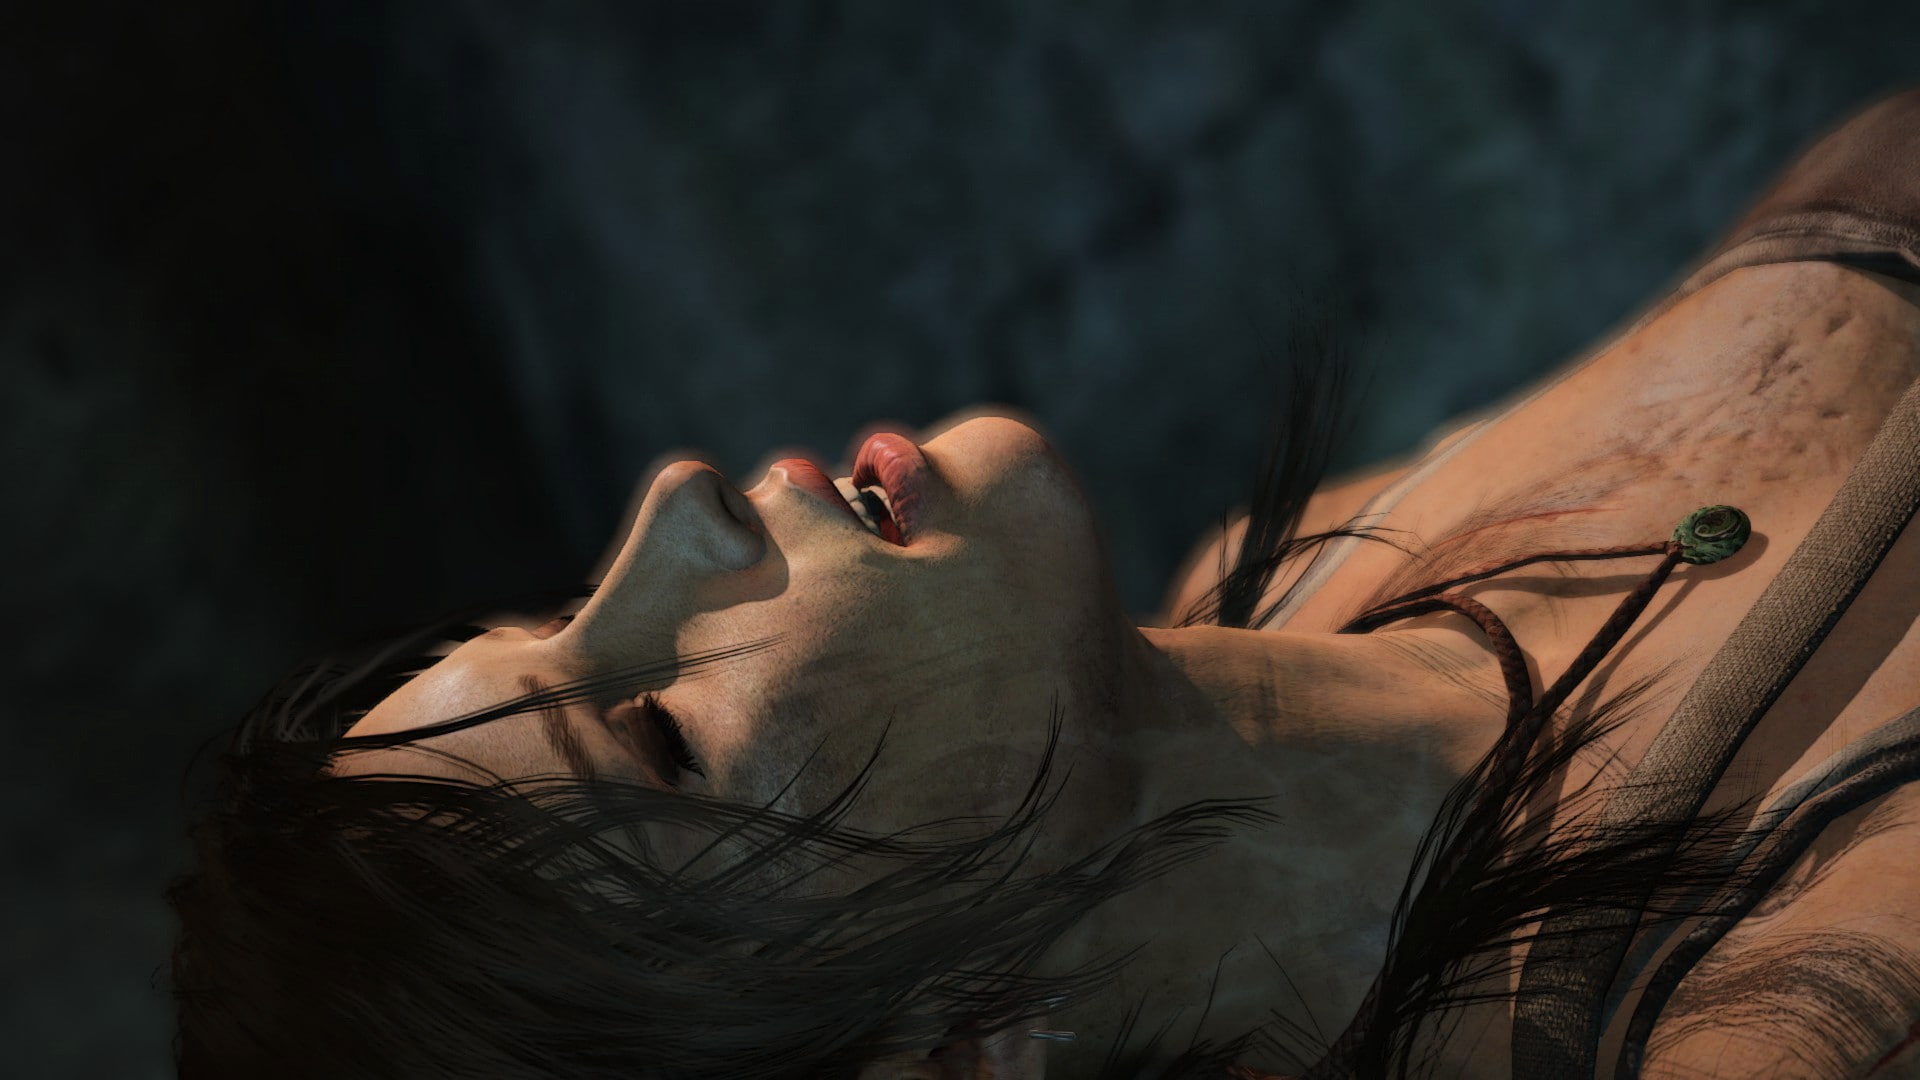 Lara Croft, tomb raider 2013, human body part, one person, adult